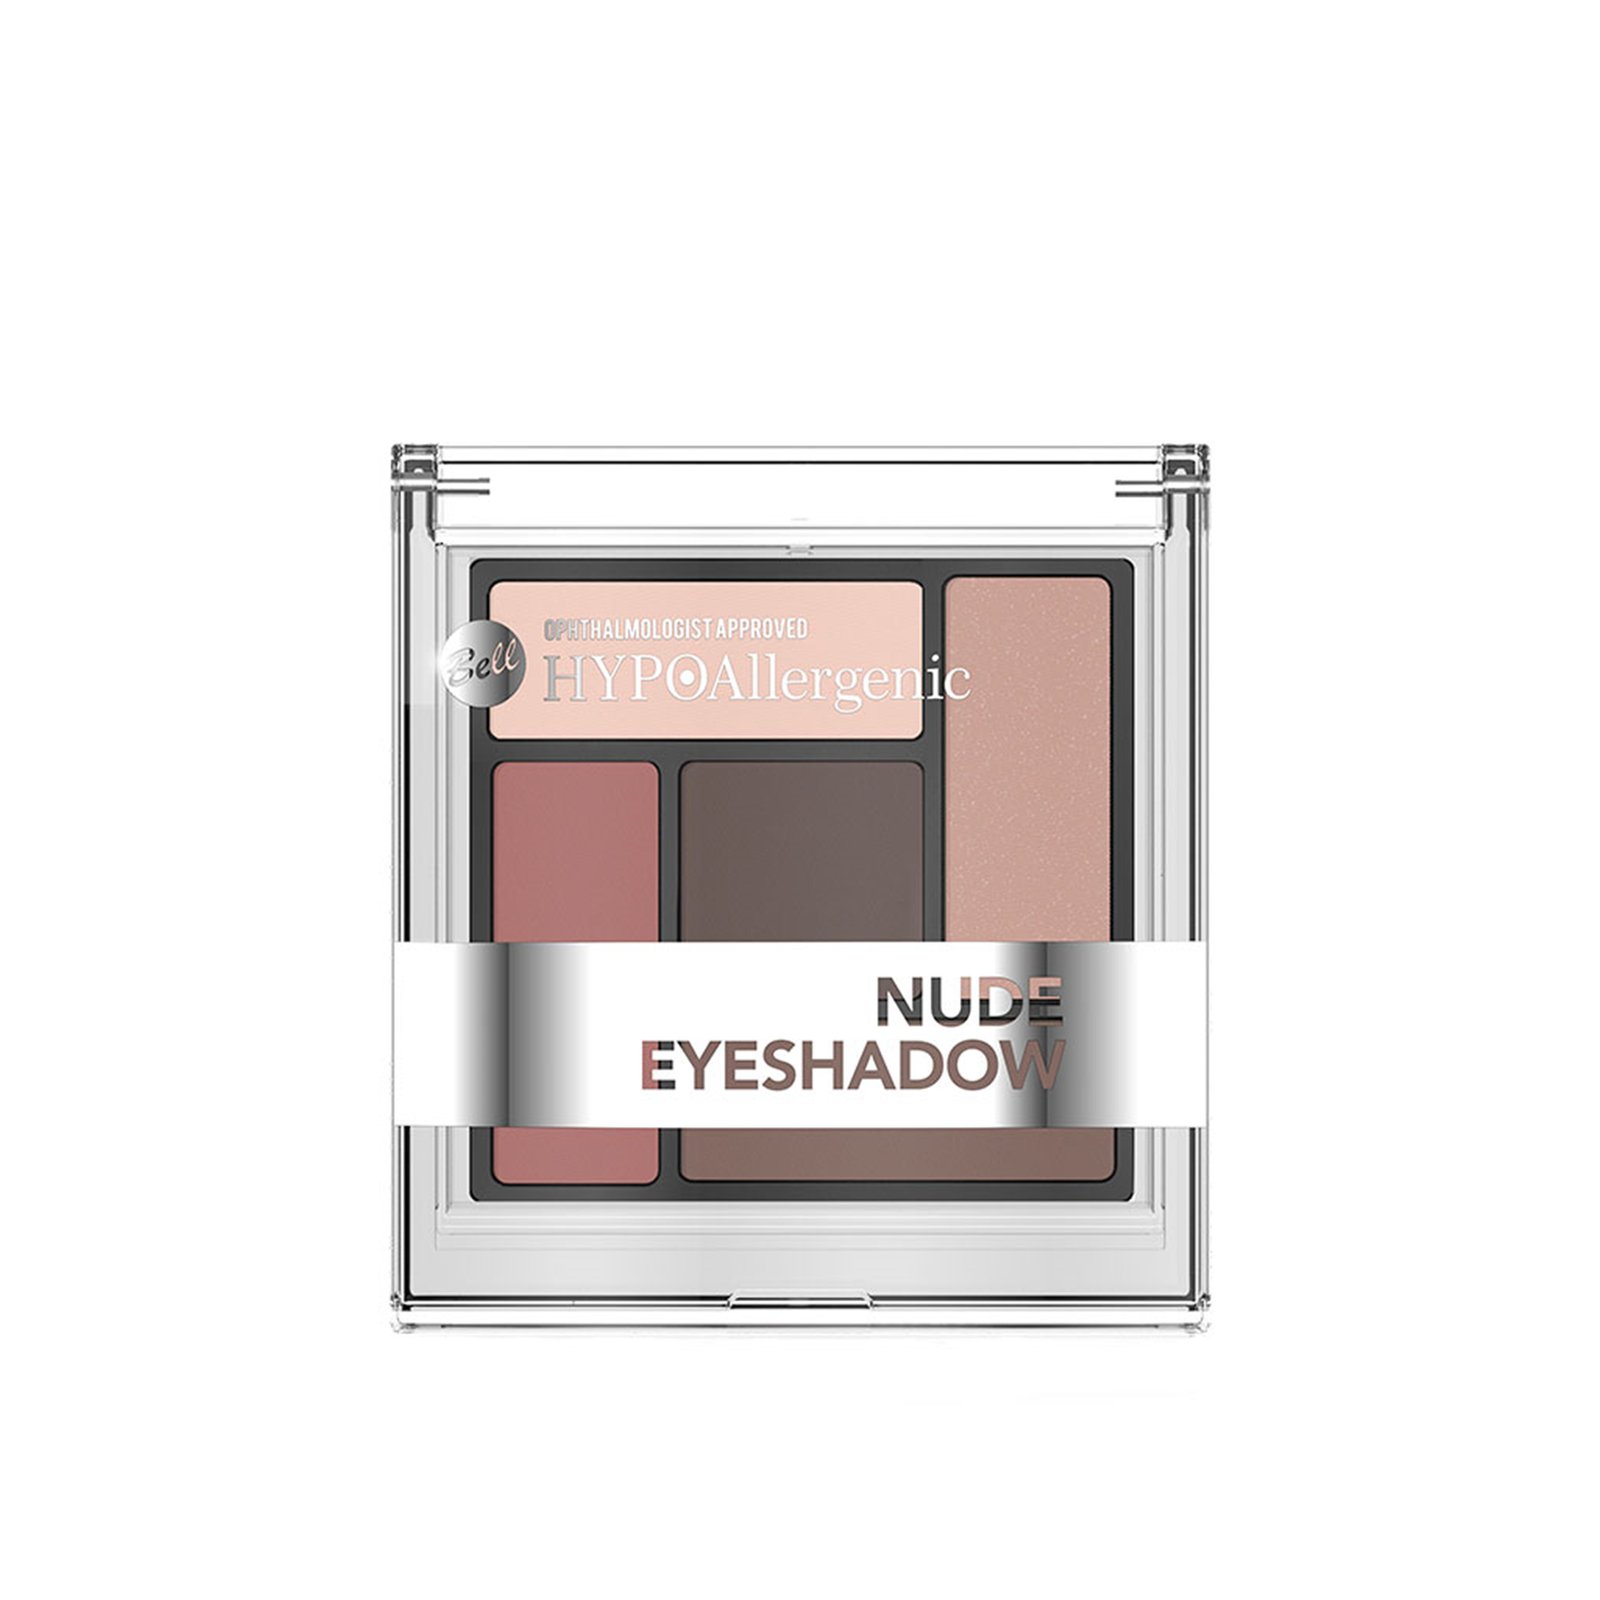 Bell HYPOAllergenic Nude Eyeshadow 01 5g (0.18 oz)